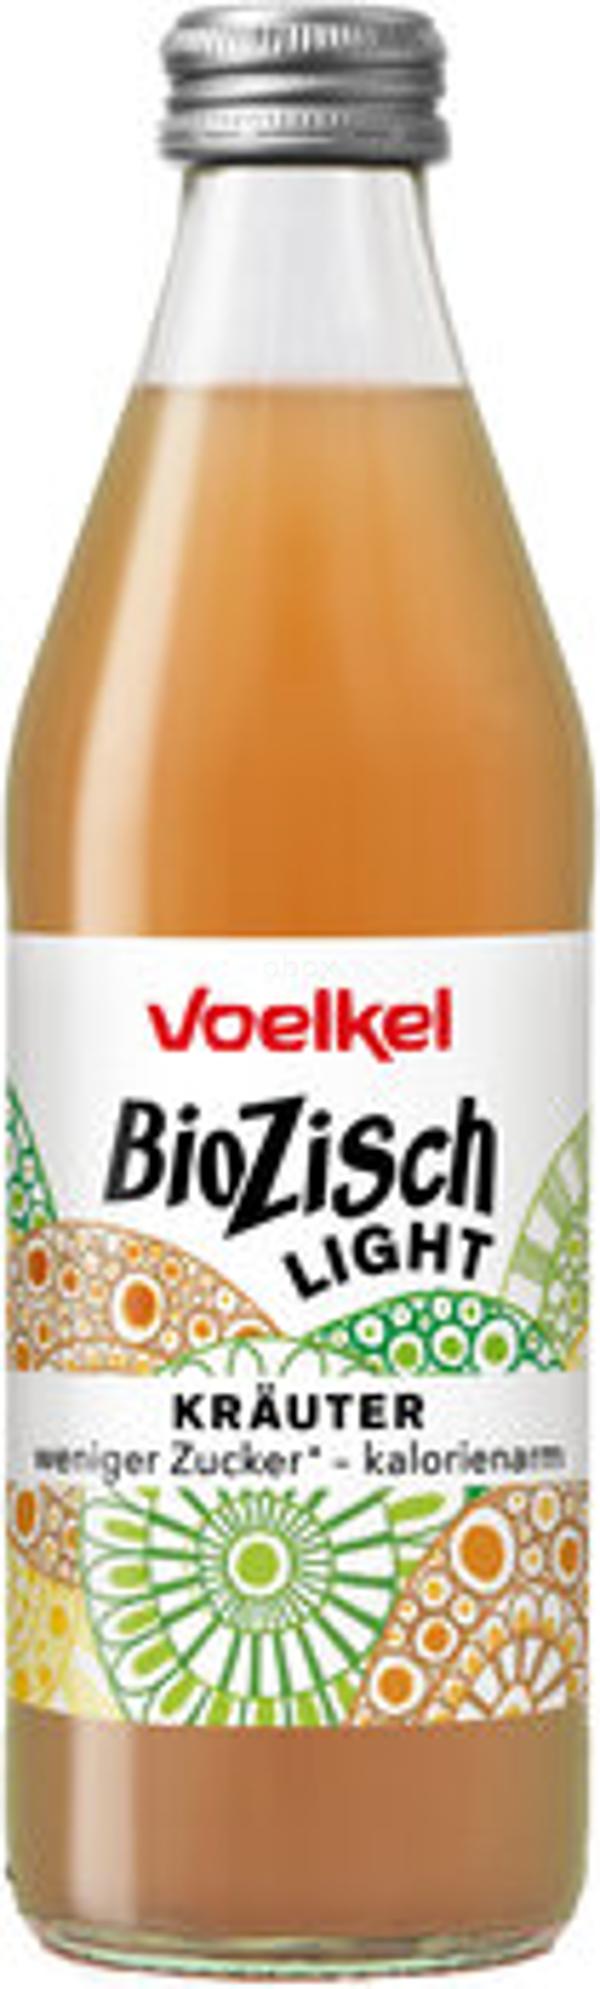 Produktfoto zu BioZisch Light Kräuter, 10x0,33 l